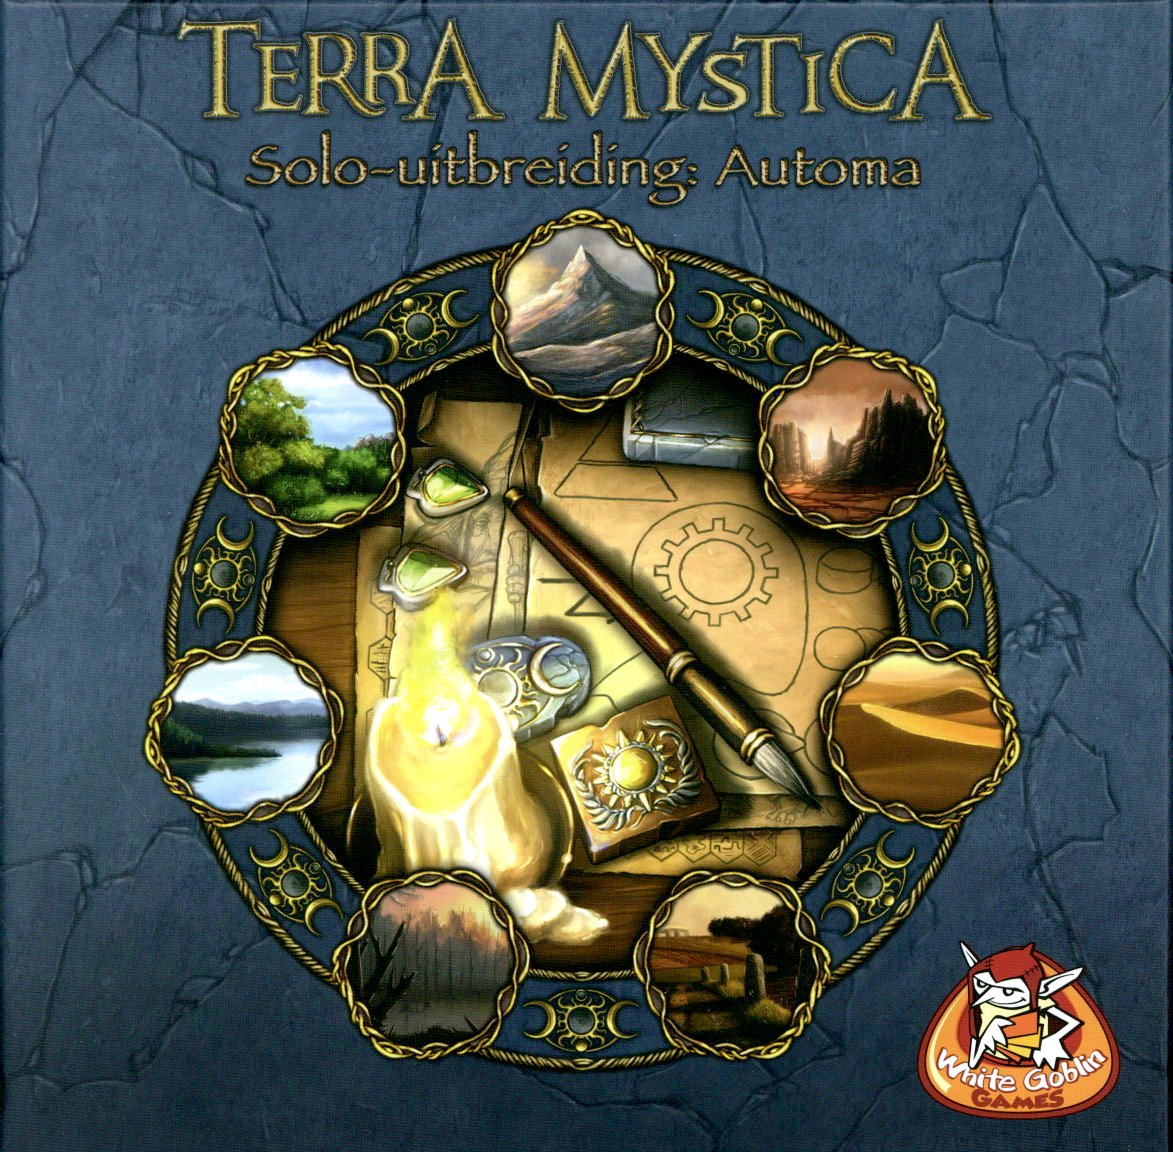 Terra Mystica Solo-uitbreiding: Automa